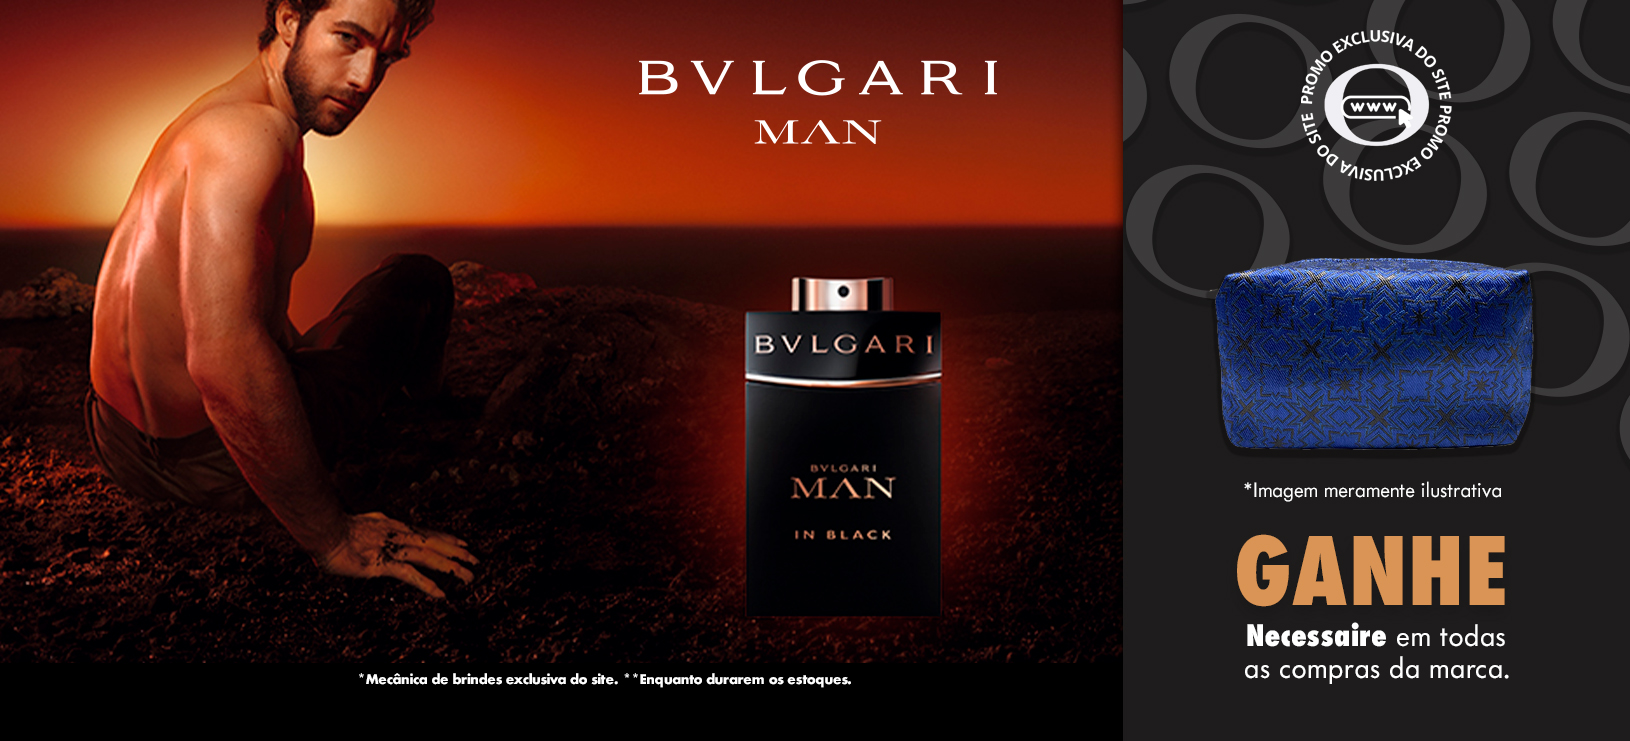 bvlgari-man-in-black-banner-desktop